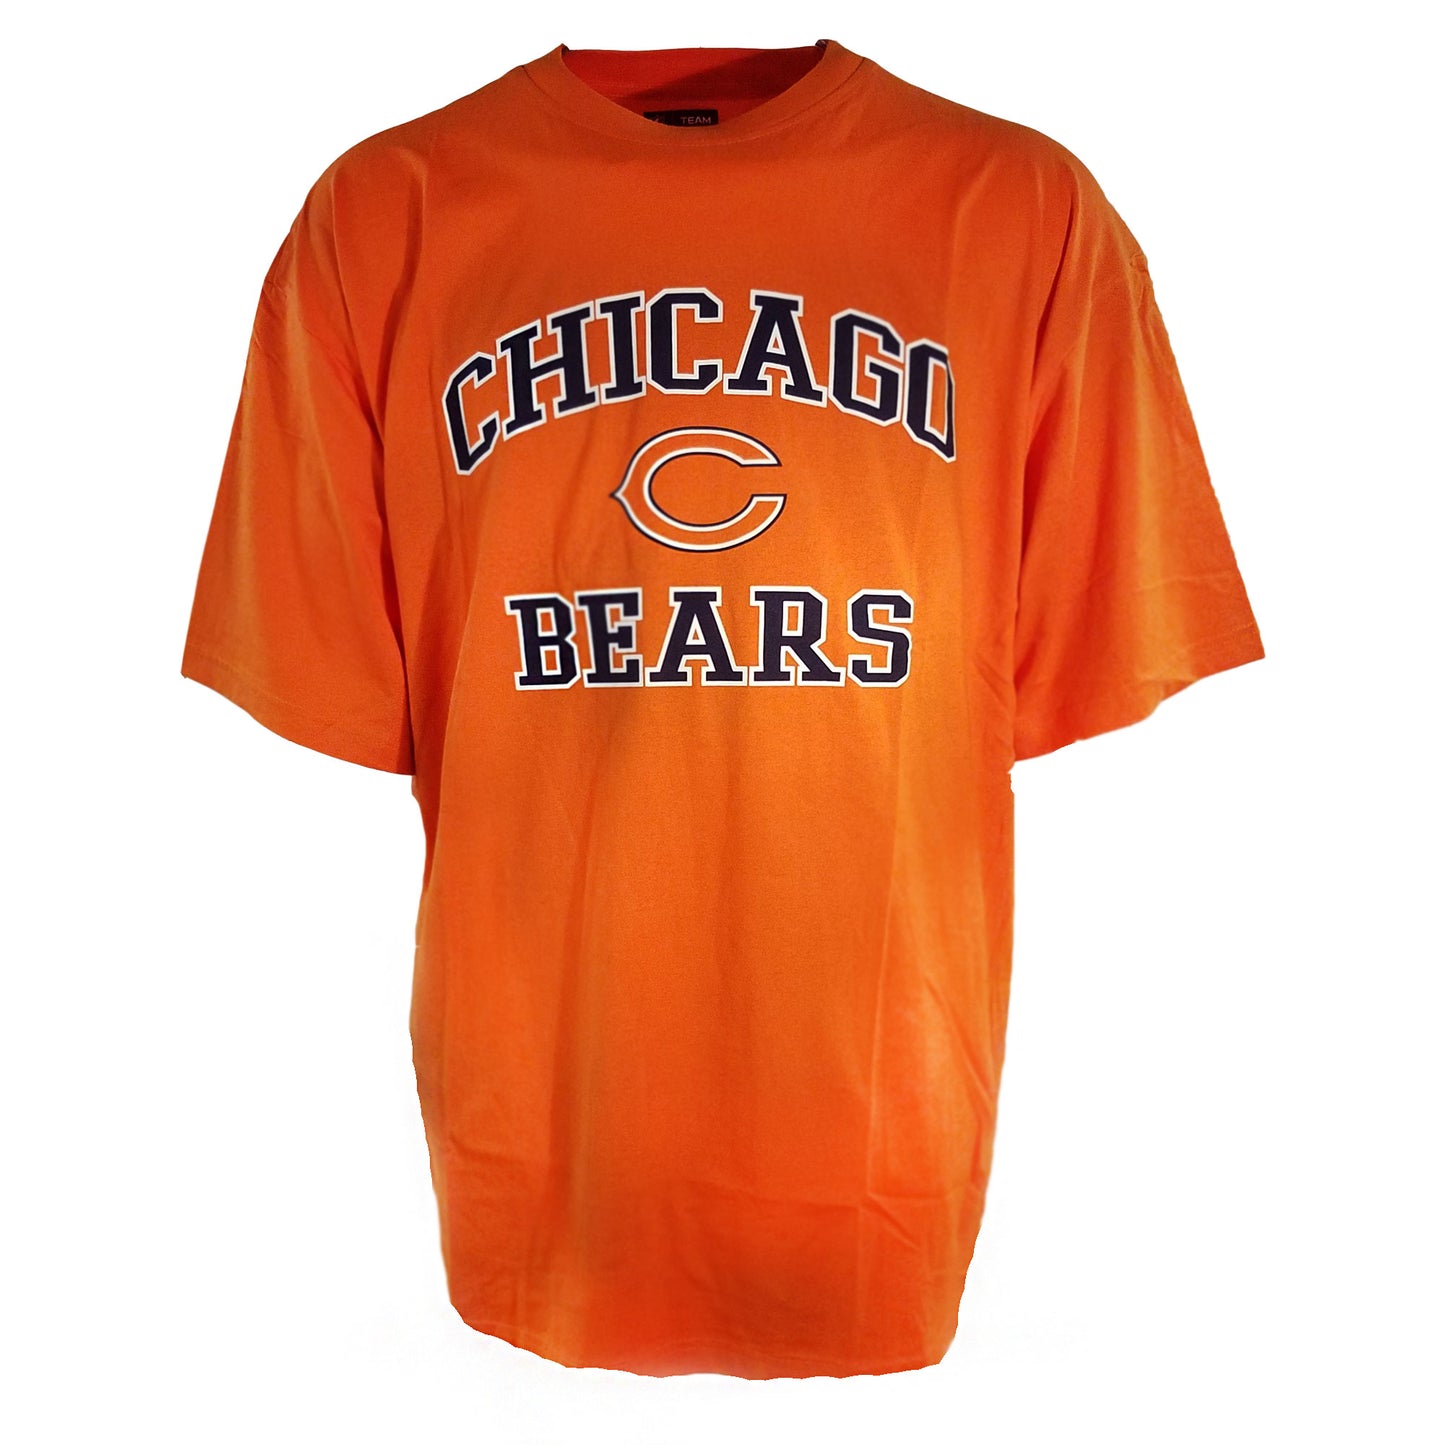 Chicago Bears Men's Orange "C" Tee